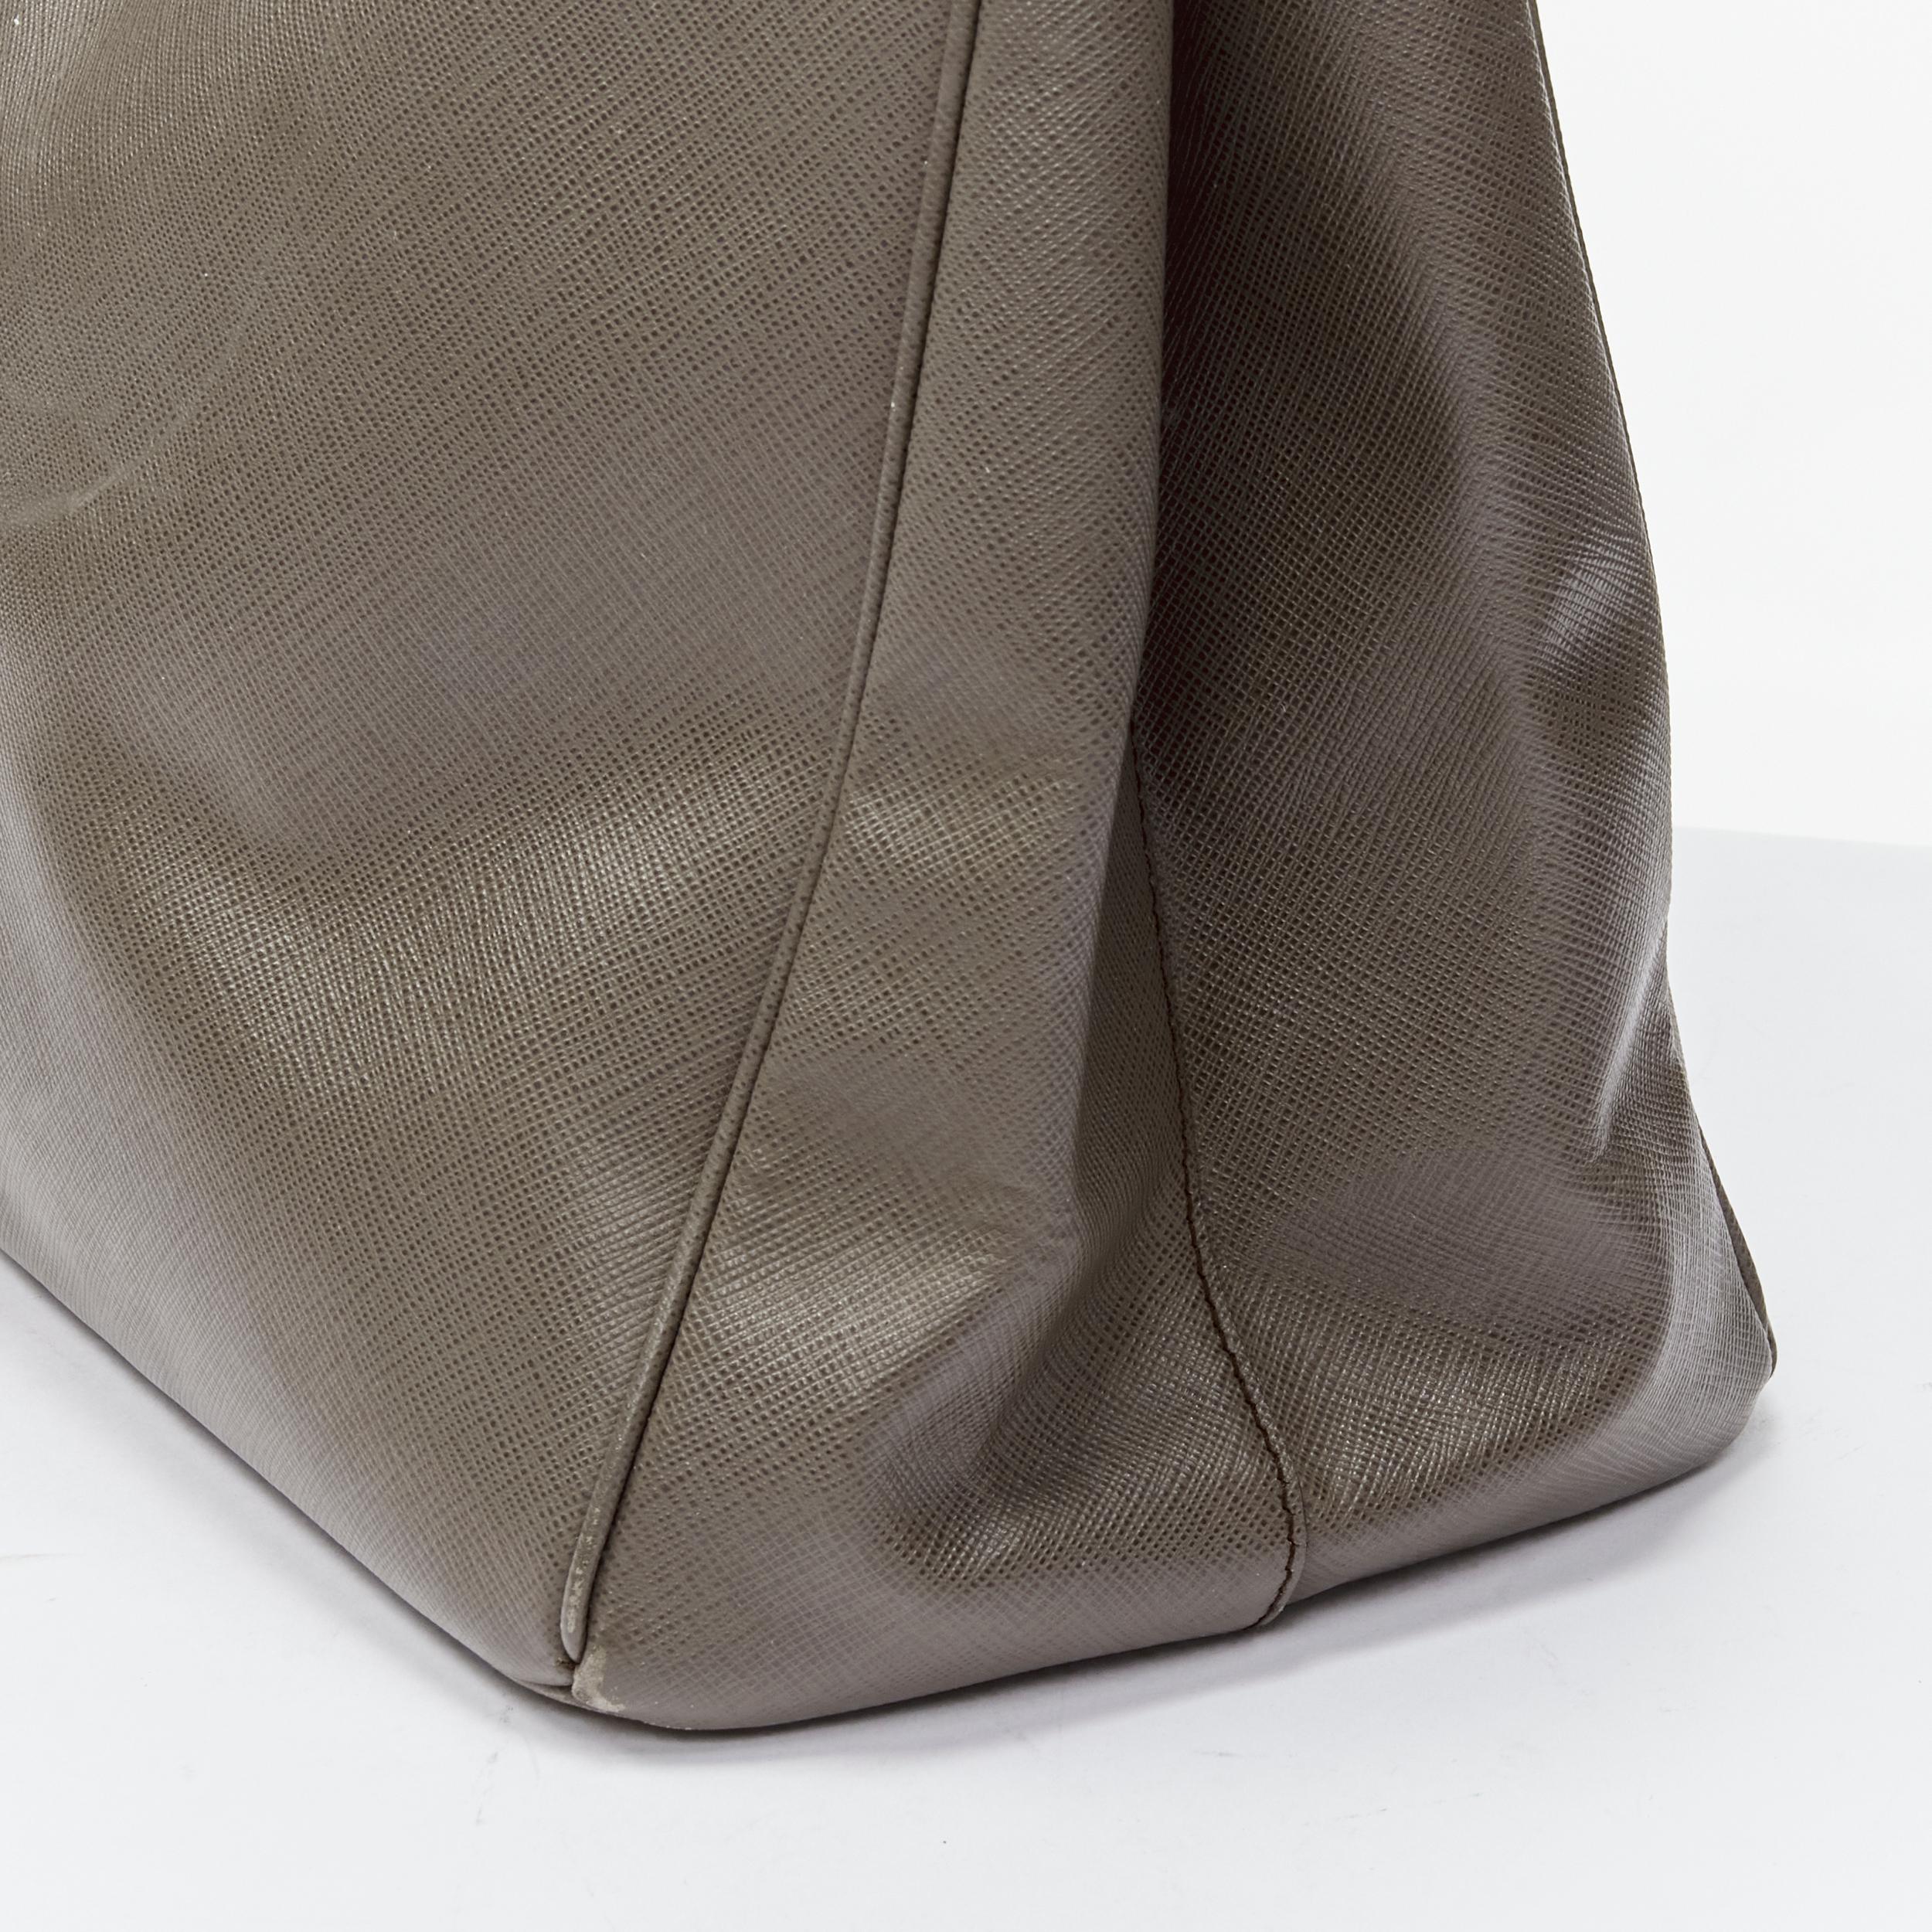 PRADA Galleria Saffiano elephant grey leather triangle logo satchel tote bag 1